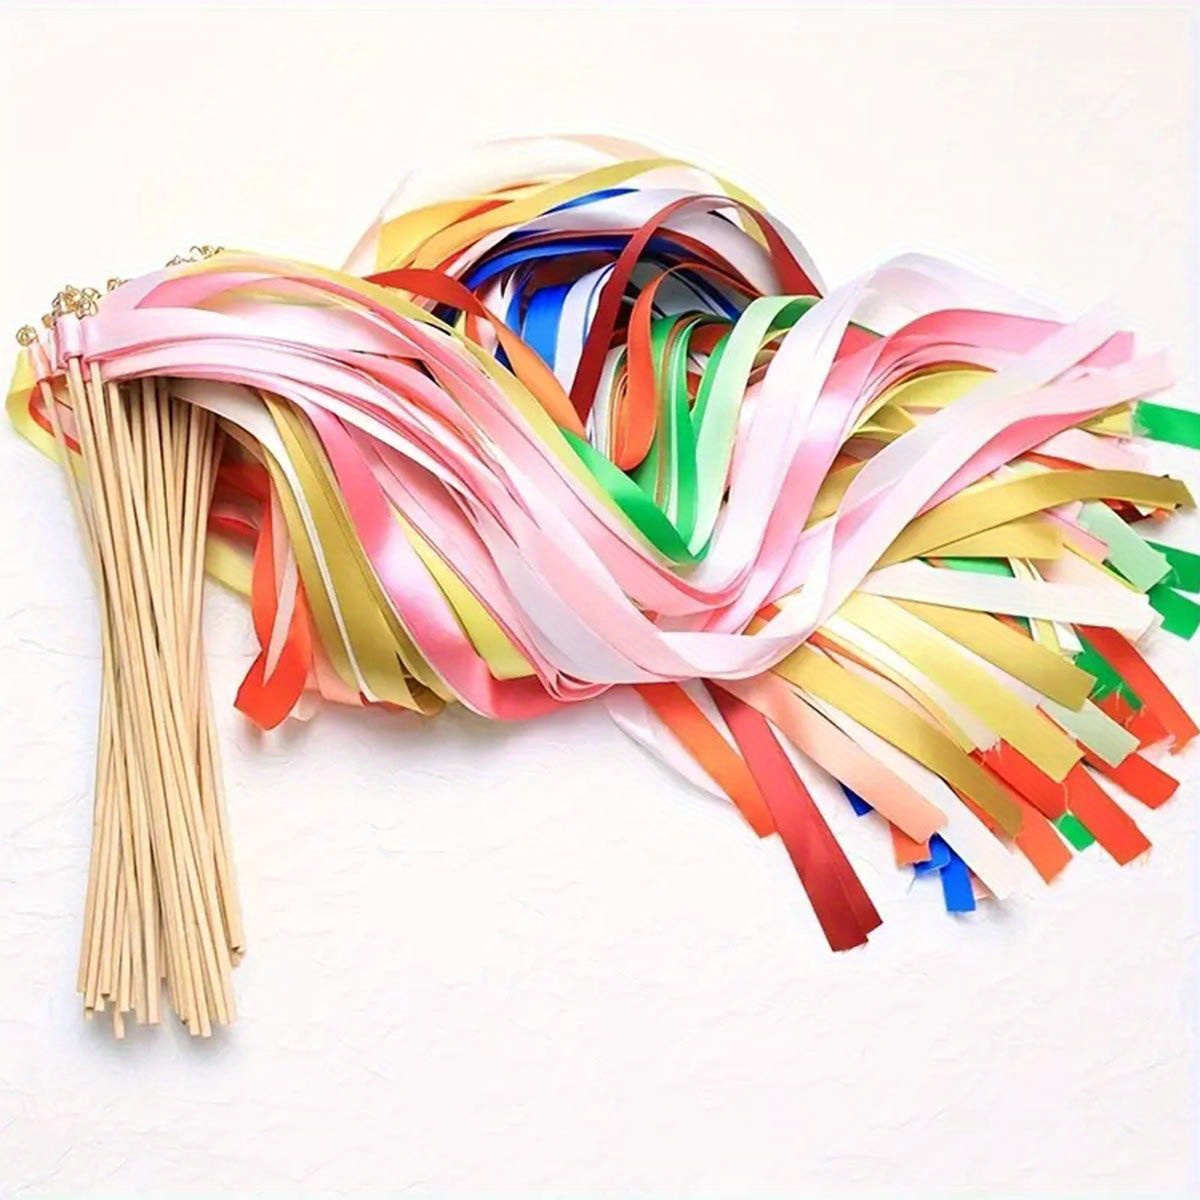 How to Make Ribbon Sticks